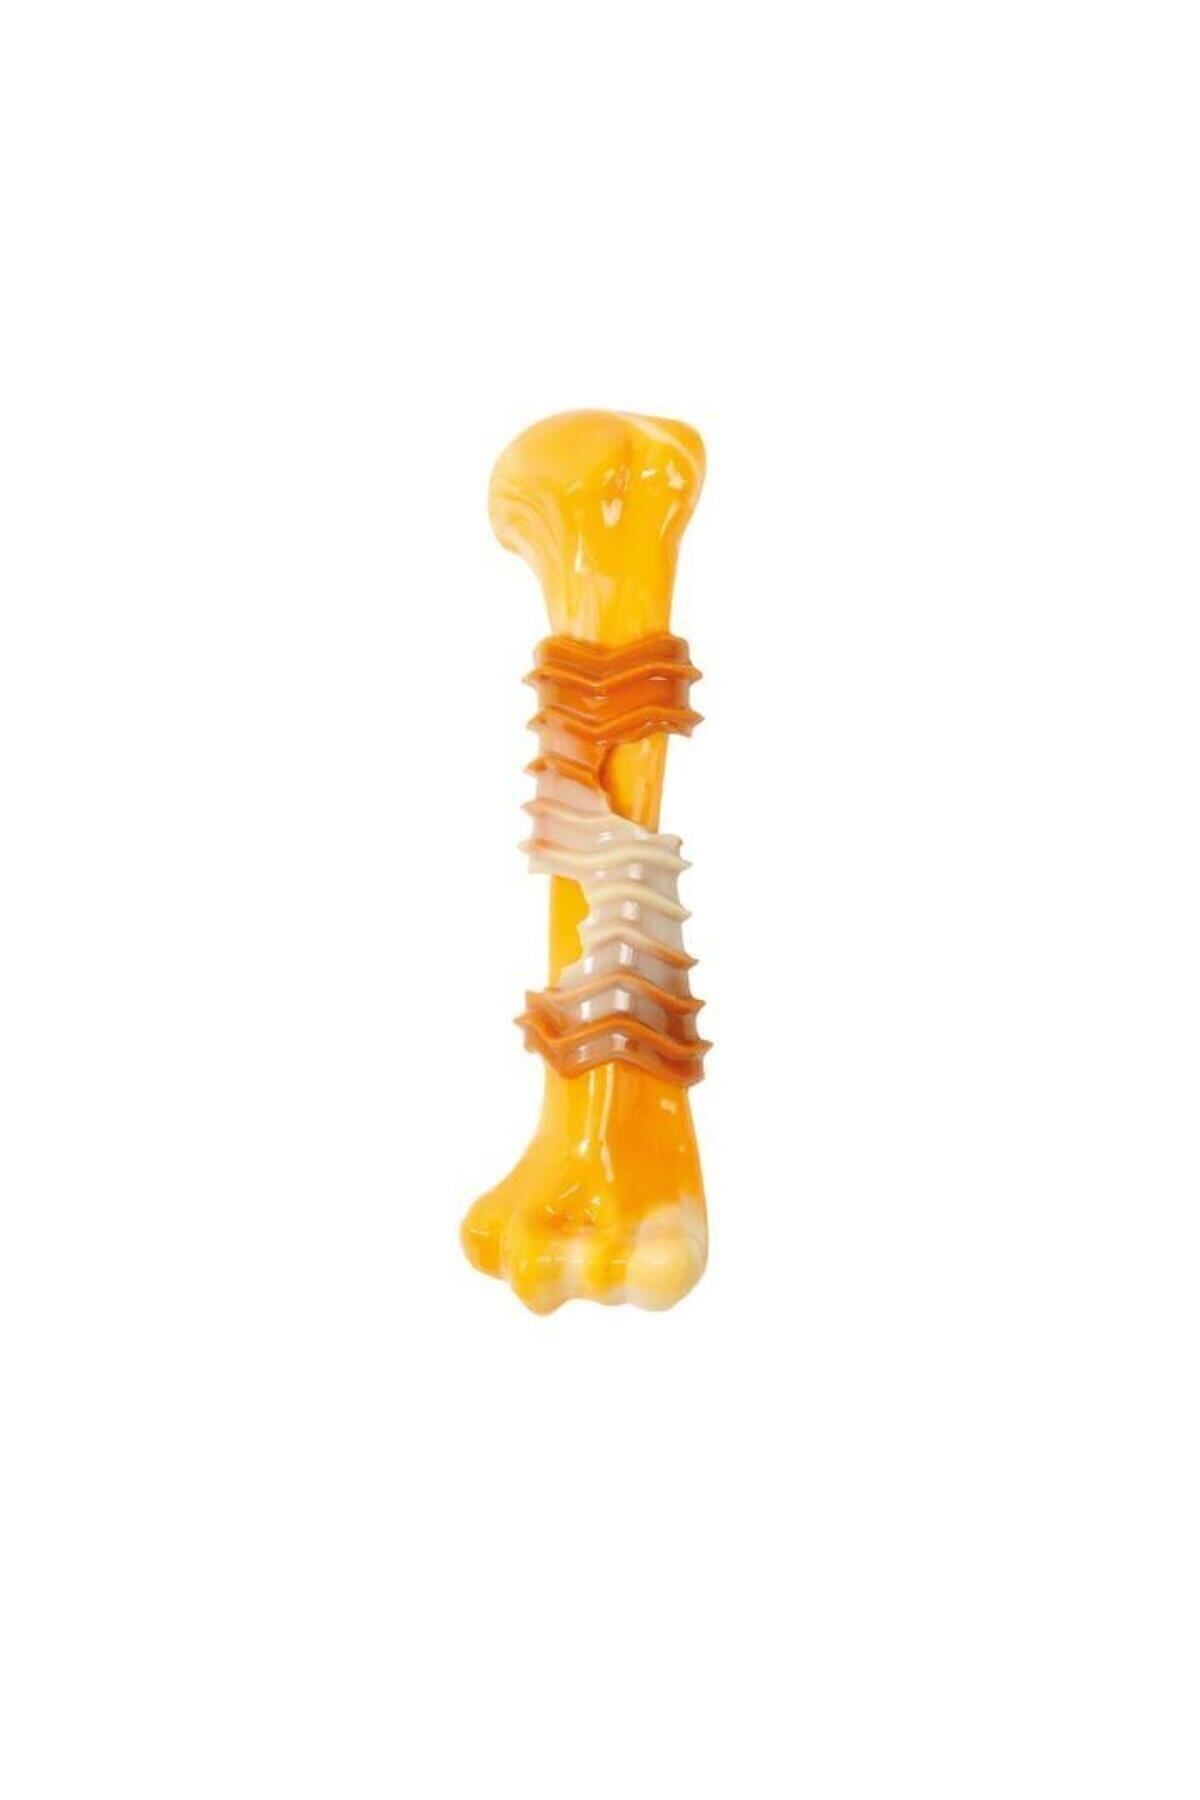 M-PETS Carnivore Dog Toy Stick Bone Pastırma